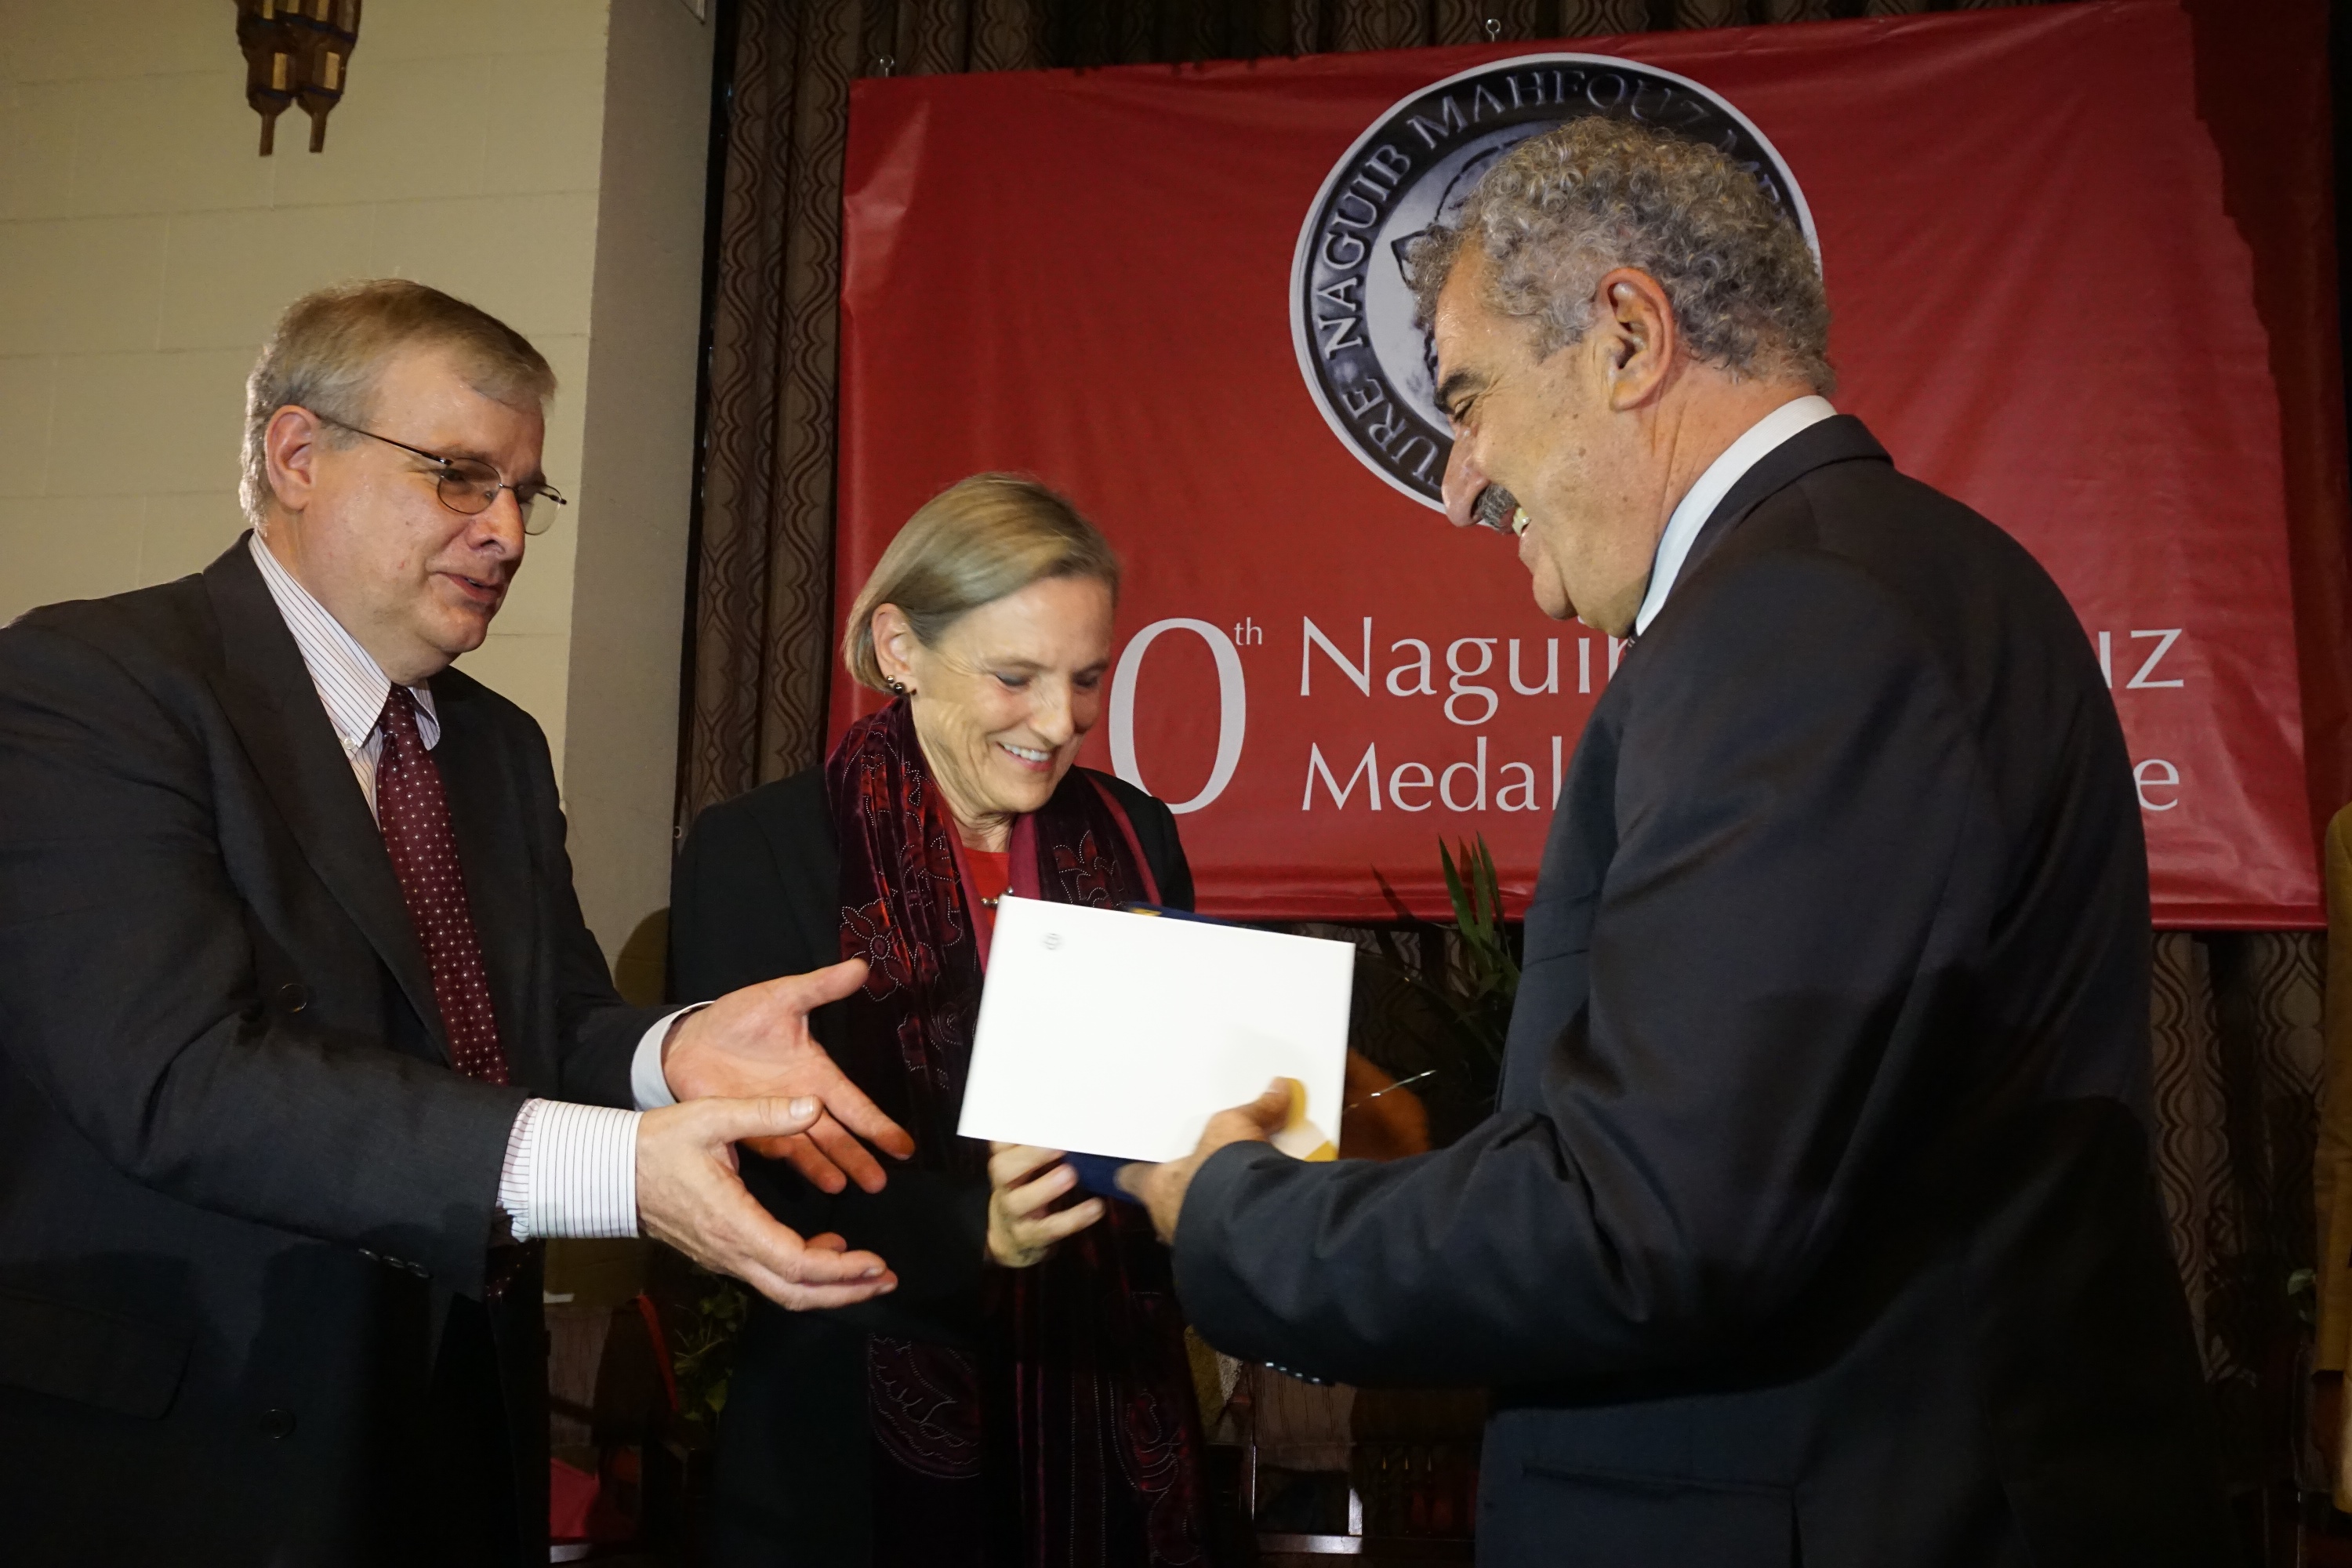 Hassan Daoud received the 2015 AUC Press Naguib Mahfouz Medal for LIterature. (Photo handout)